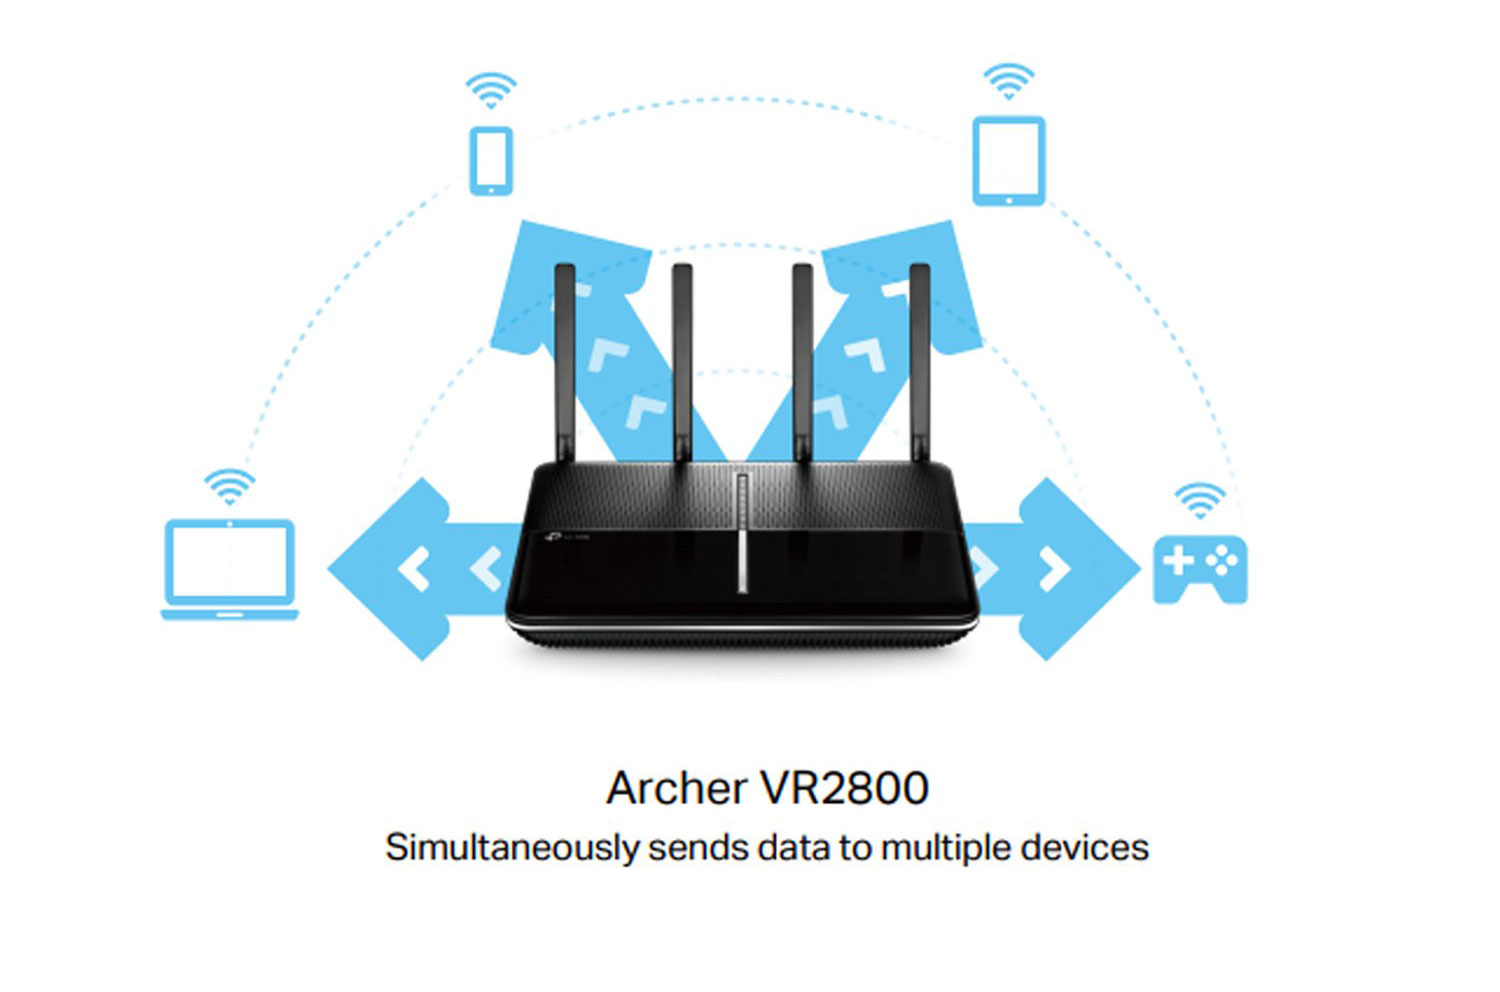 مودم روتر ADSL/VDSL تی پی لینک Tp-Link Archer VR2800 وای فای AC2800